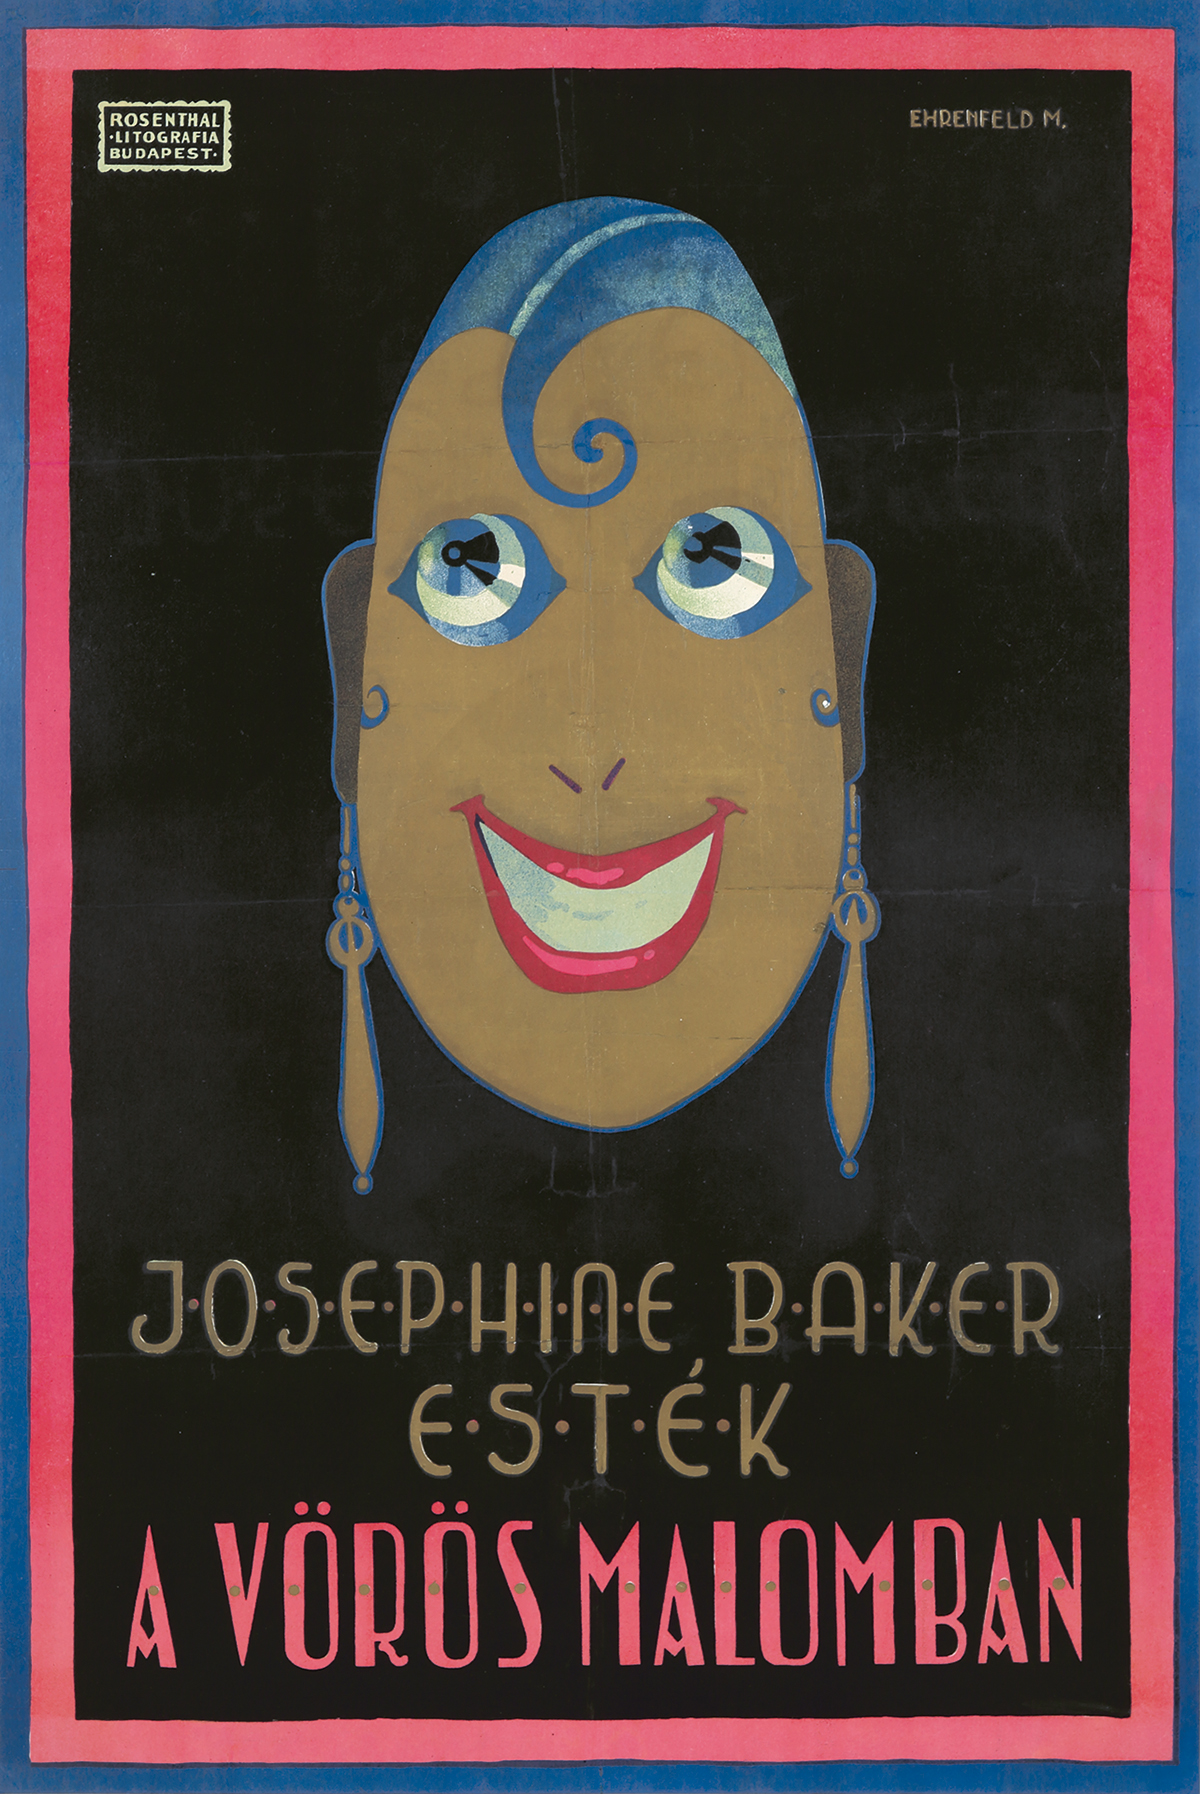 Josephine rosenthal